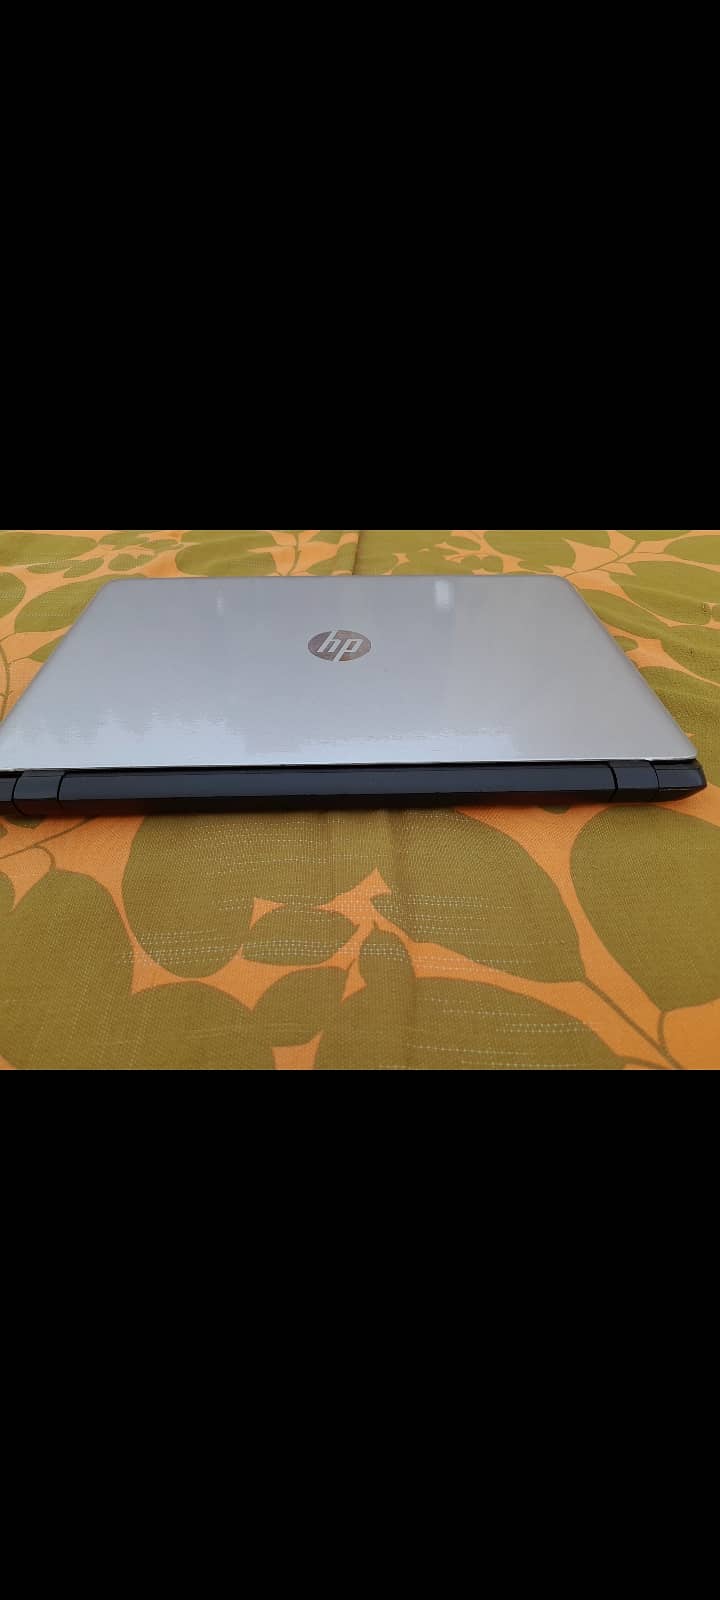 HP Elitebook350 G2 | i5 5th Gen | 8GB RAM | 256GB SSD 6